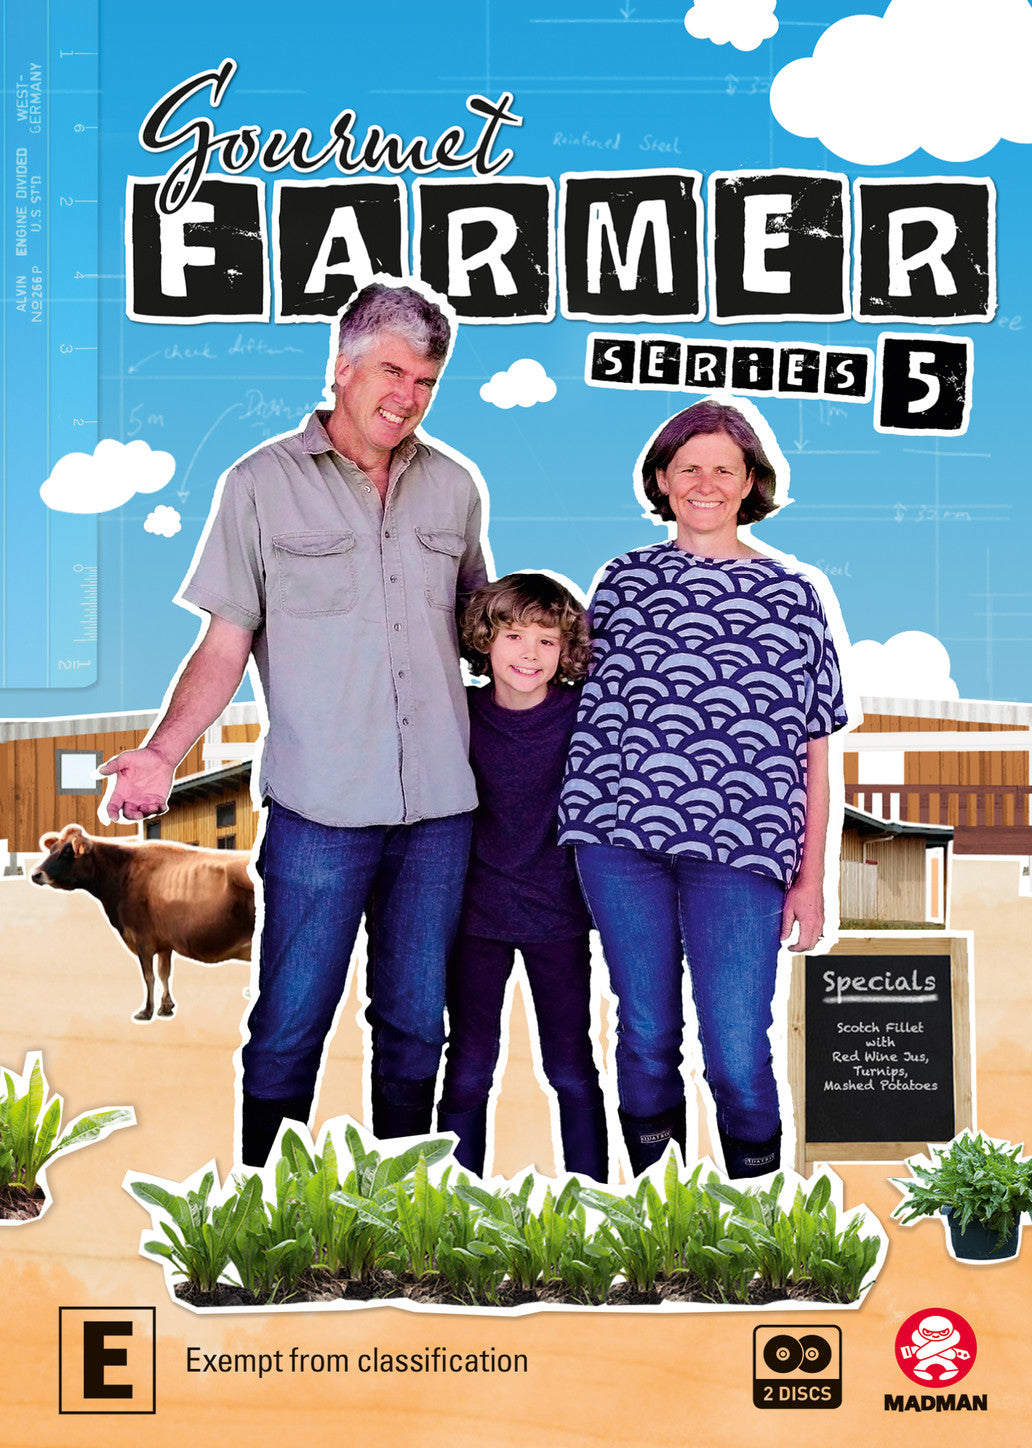 GOURMET FARMER - SERIES 5